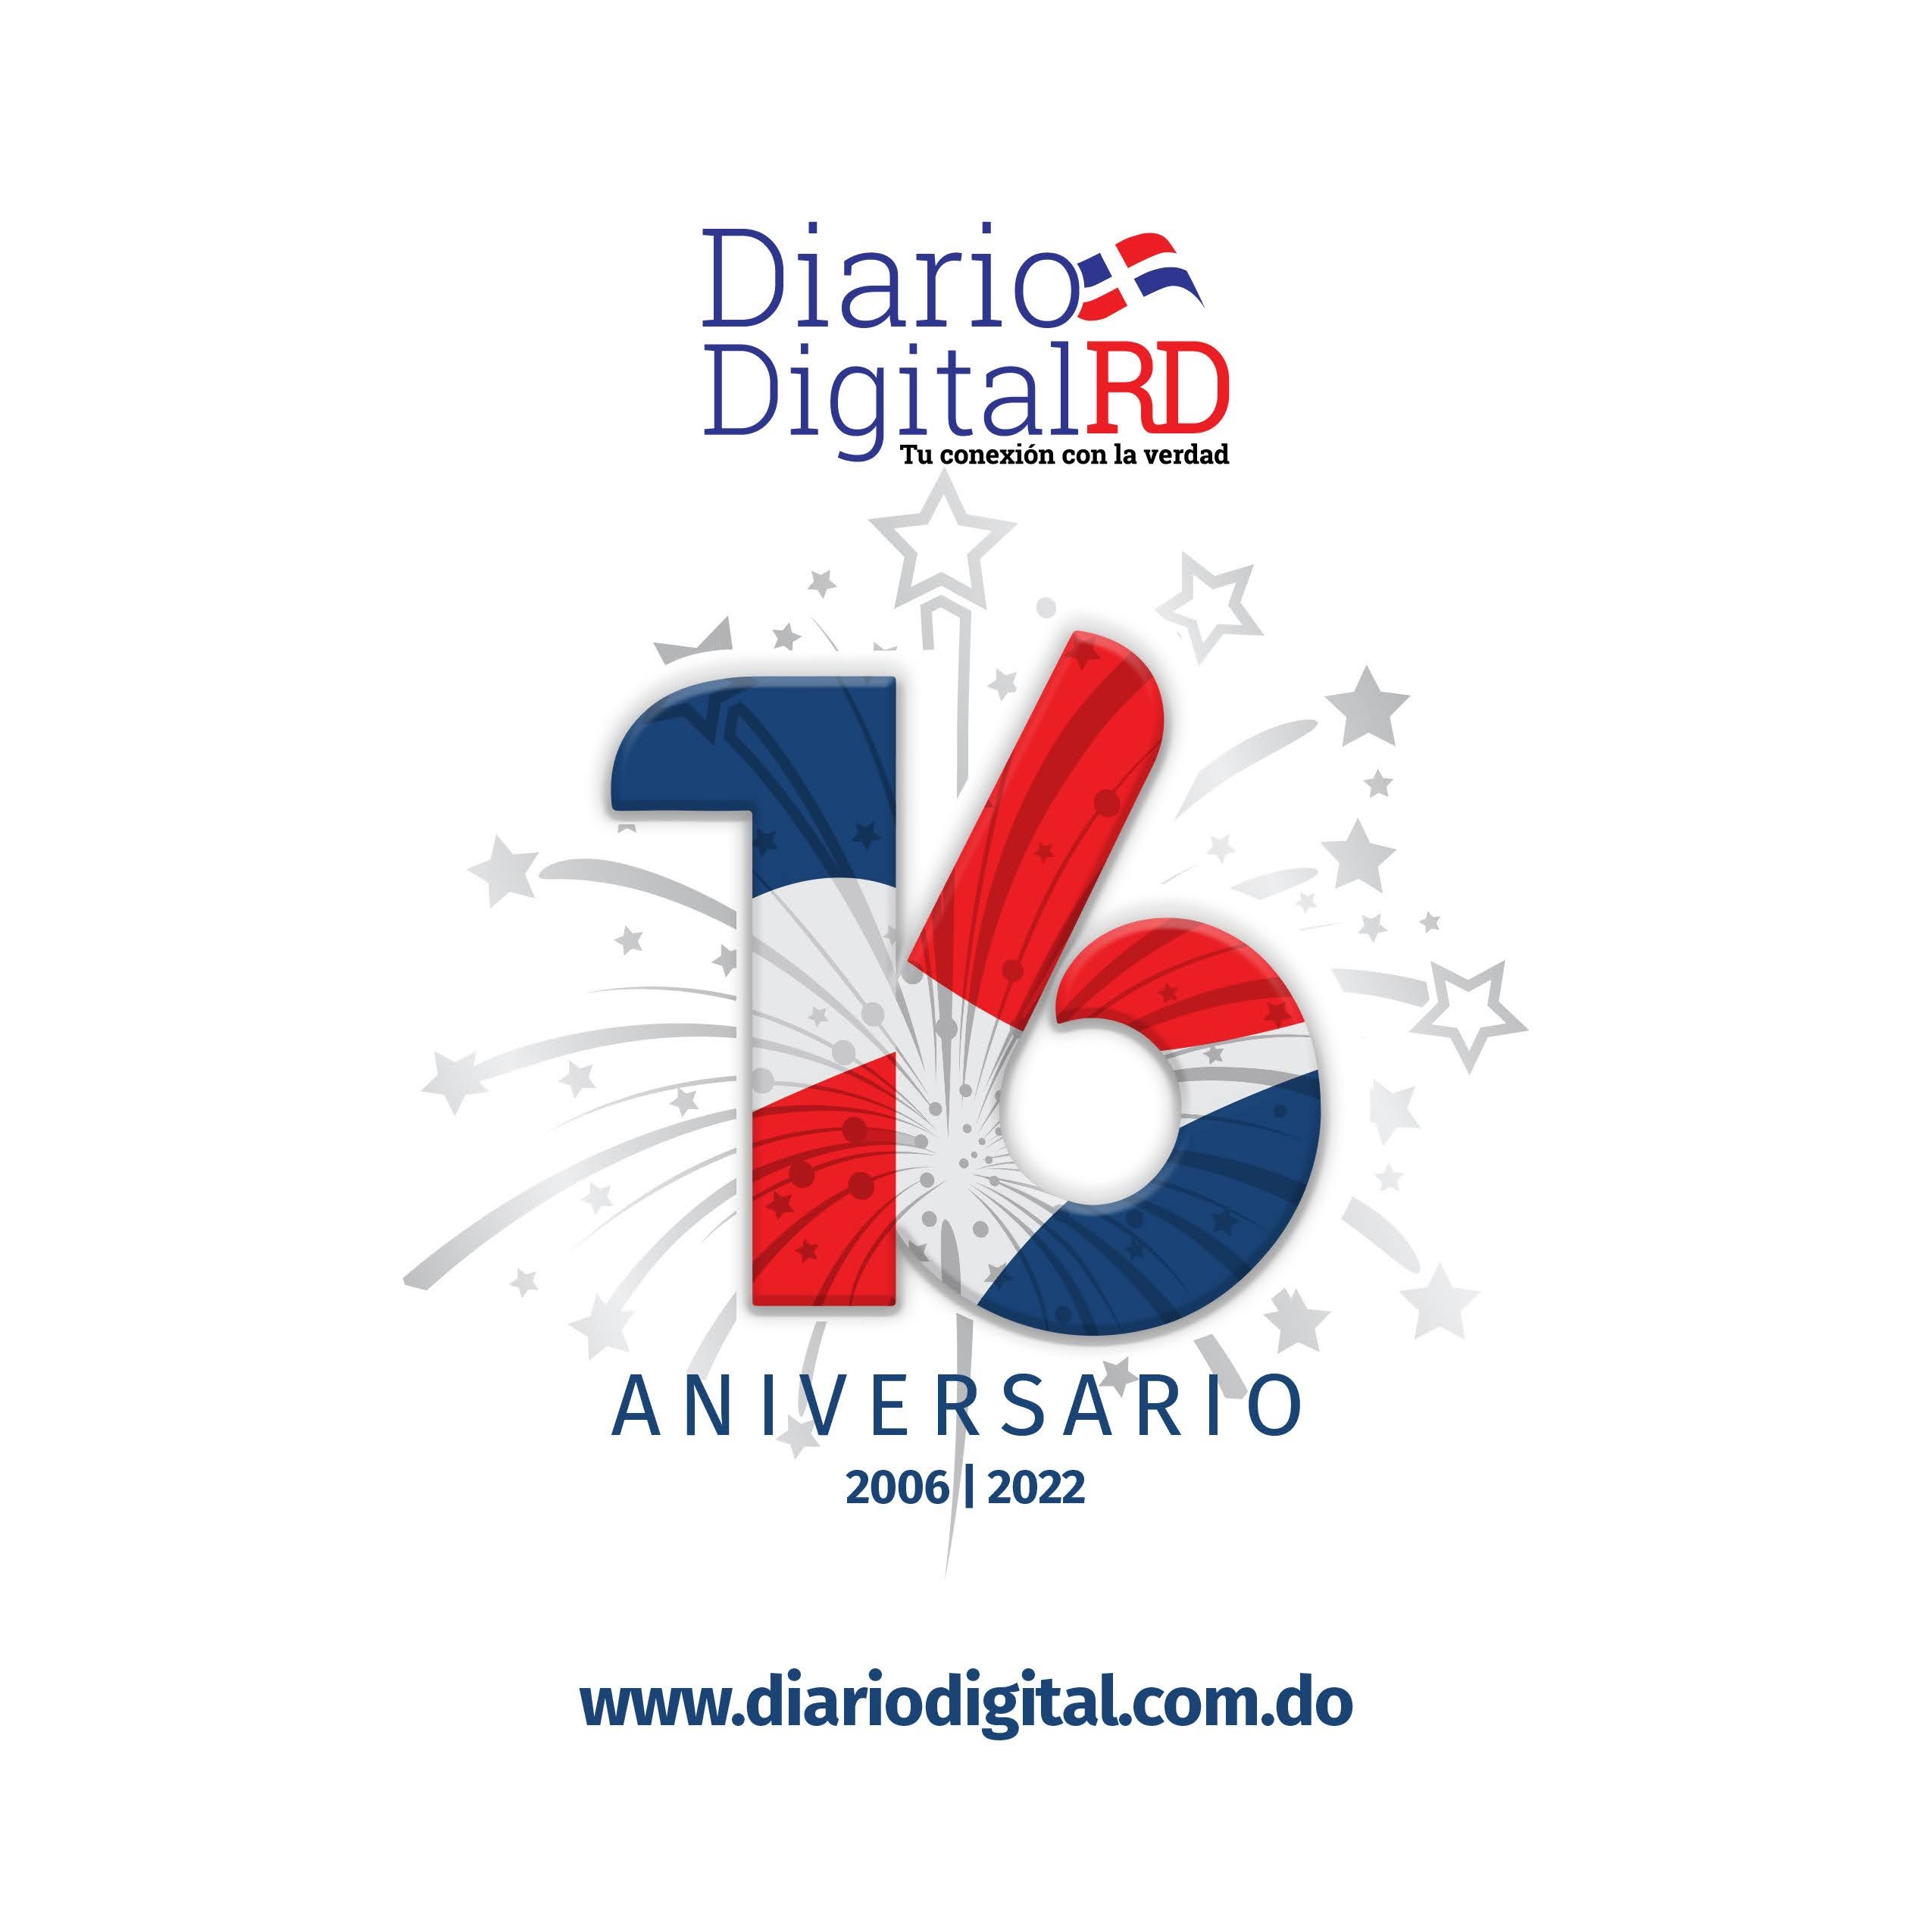 16 Aniversario de DiarioDigitalRD. Gracias por acompañarnos en esta ruta